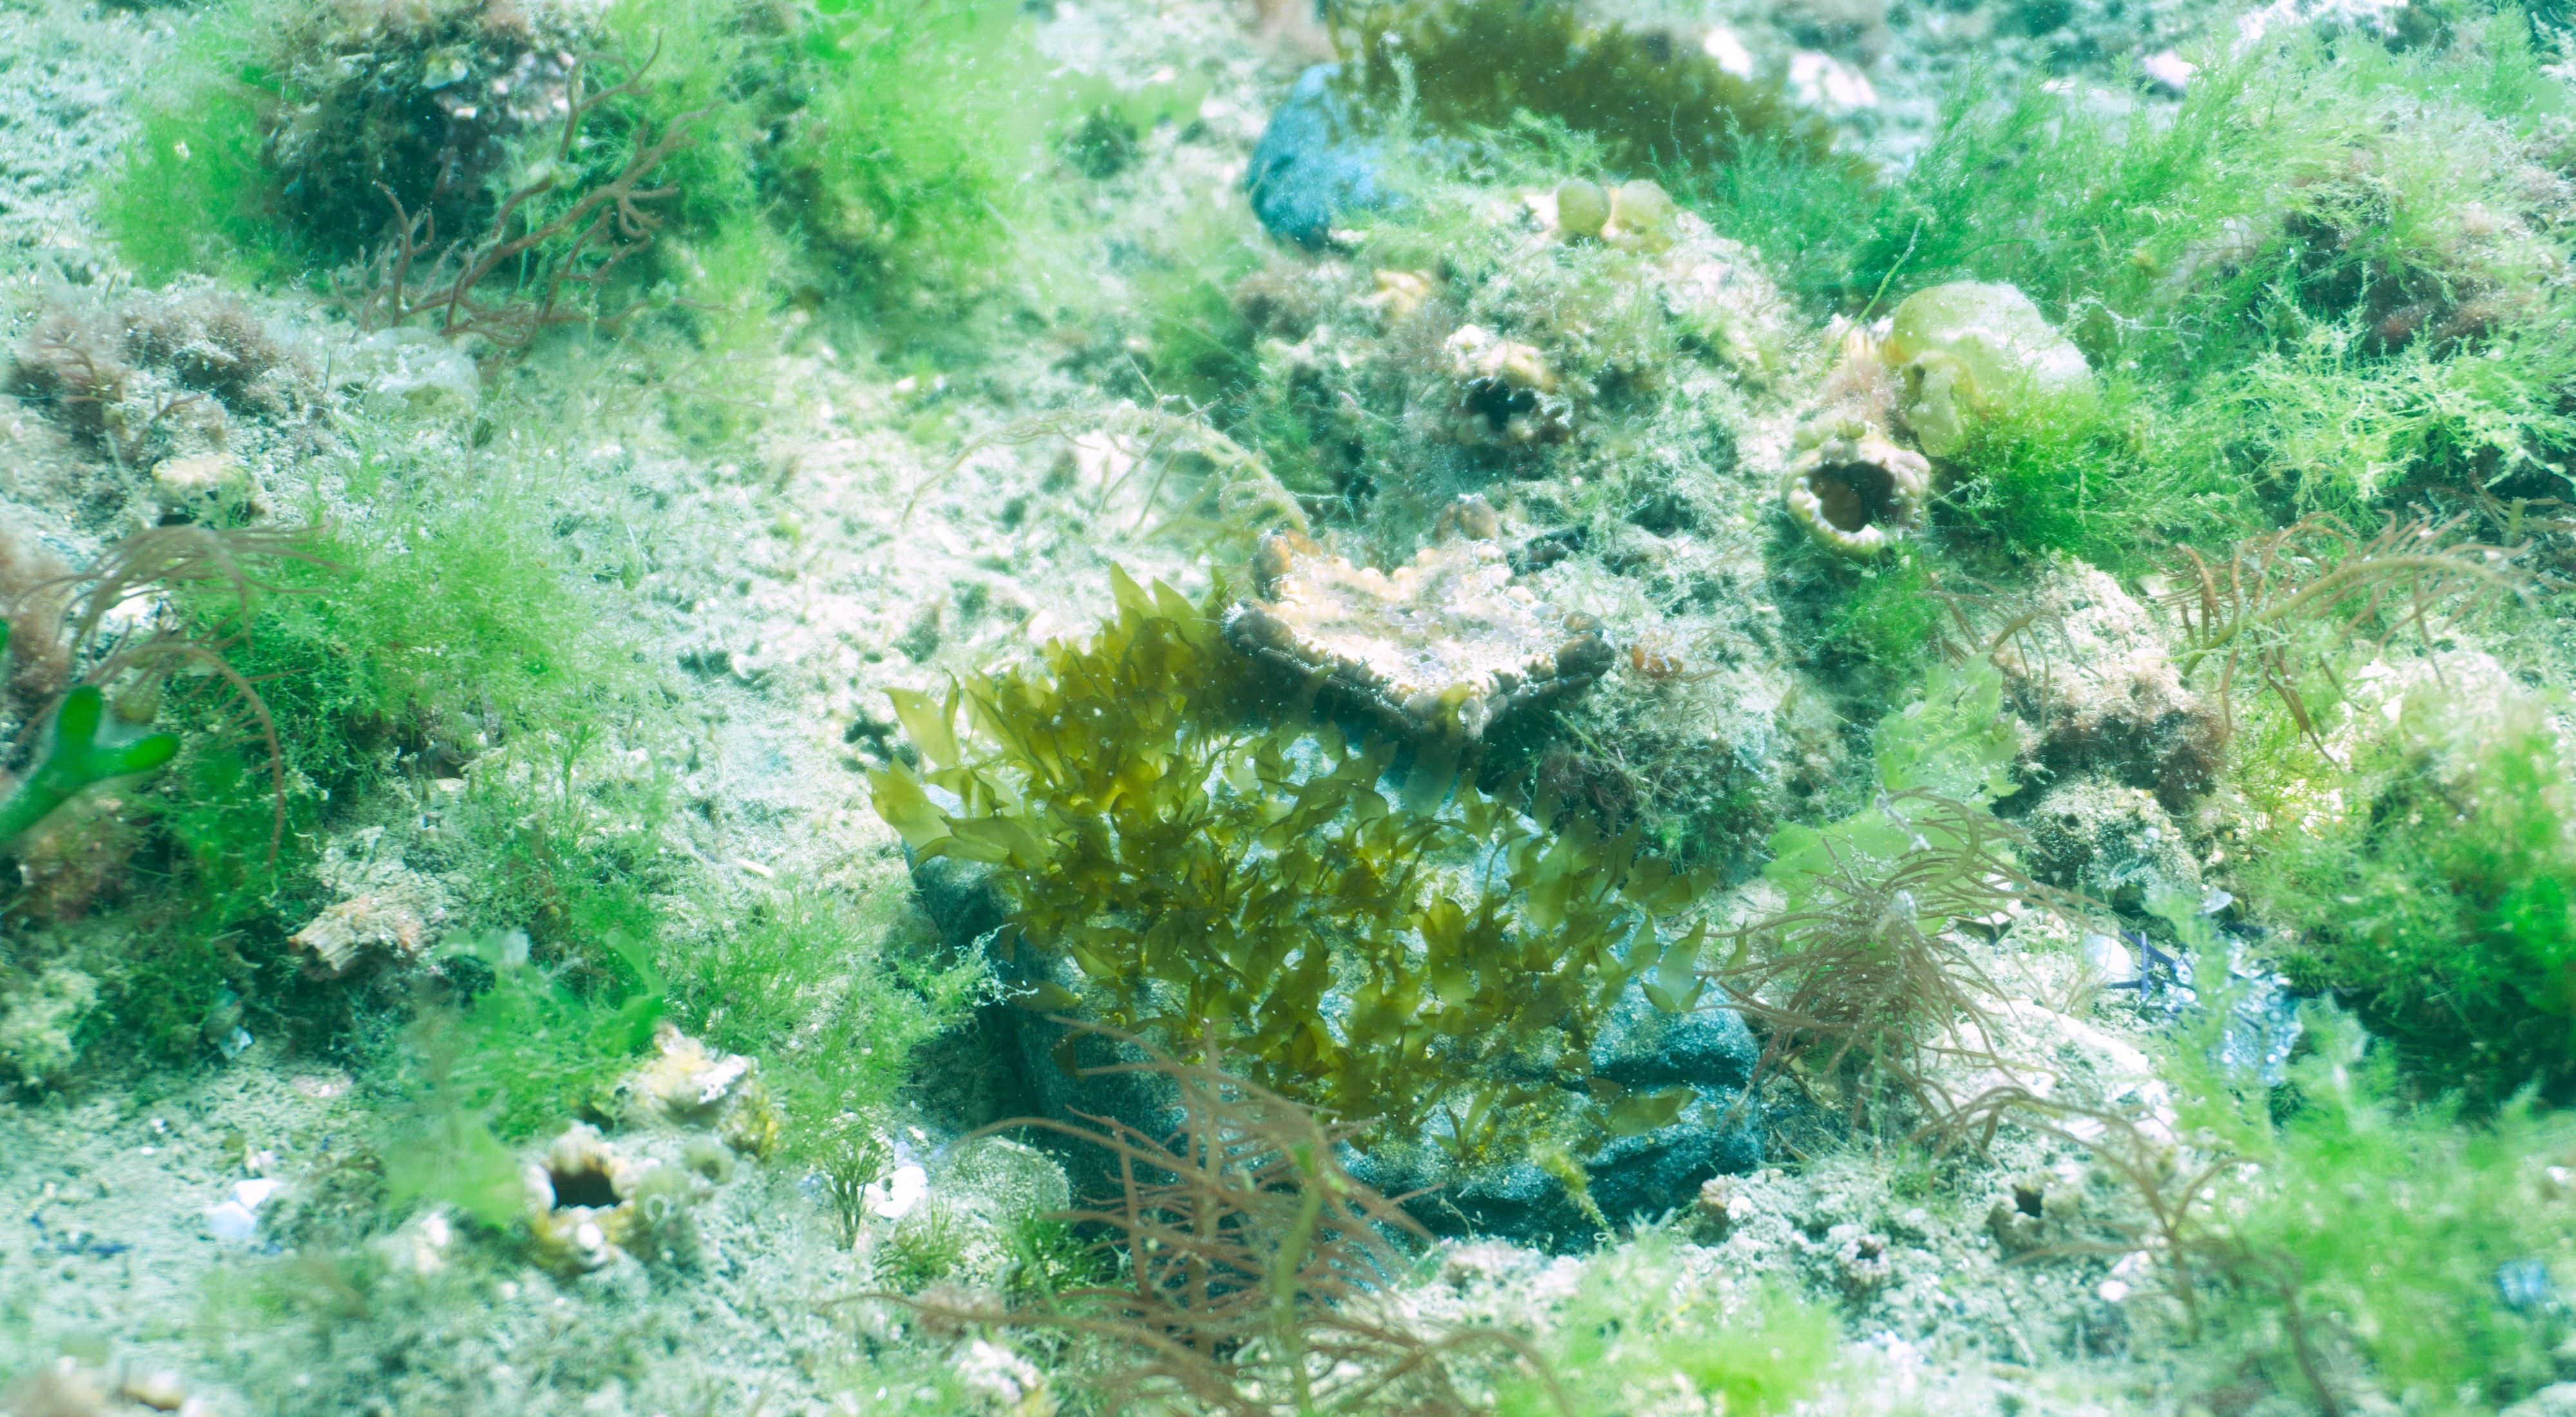 Outplanted juvenile kelp